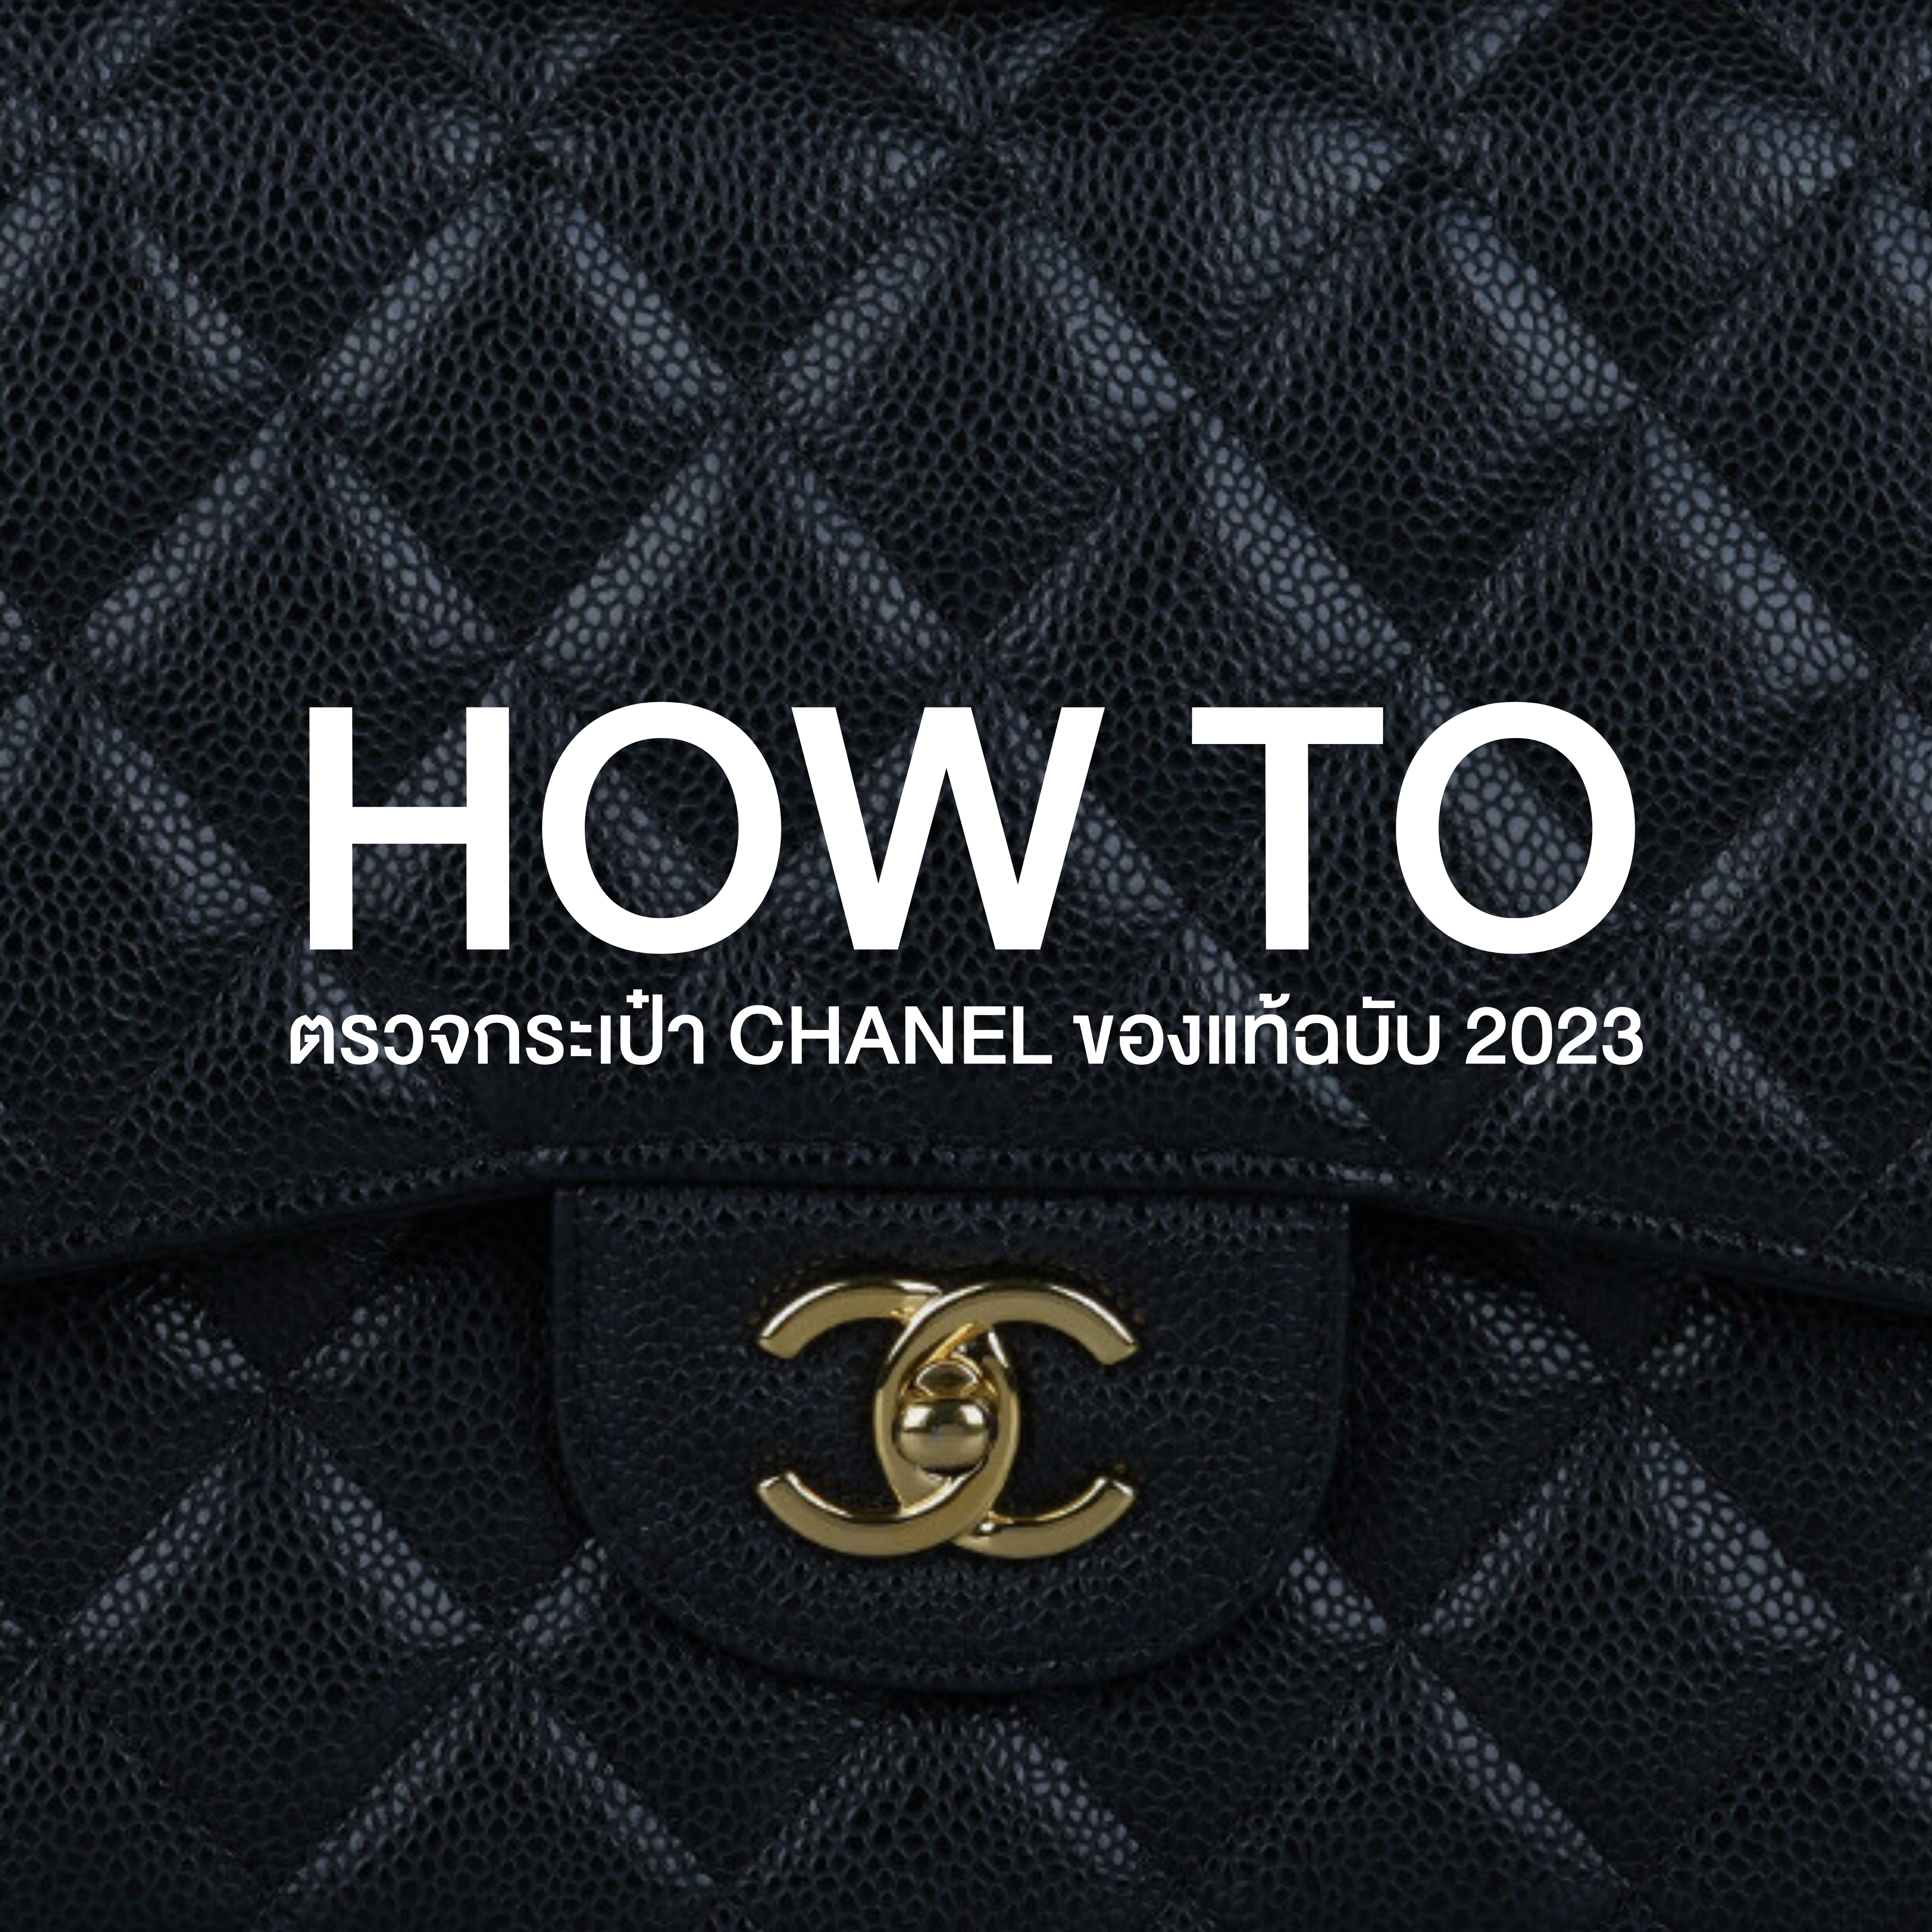 How to ตรวจกระเป๋า Chanel ของแท้ฉบับ 2023